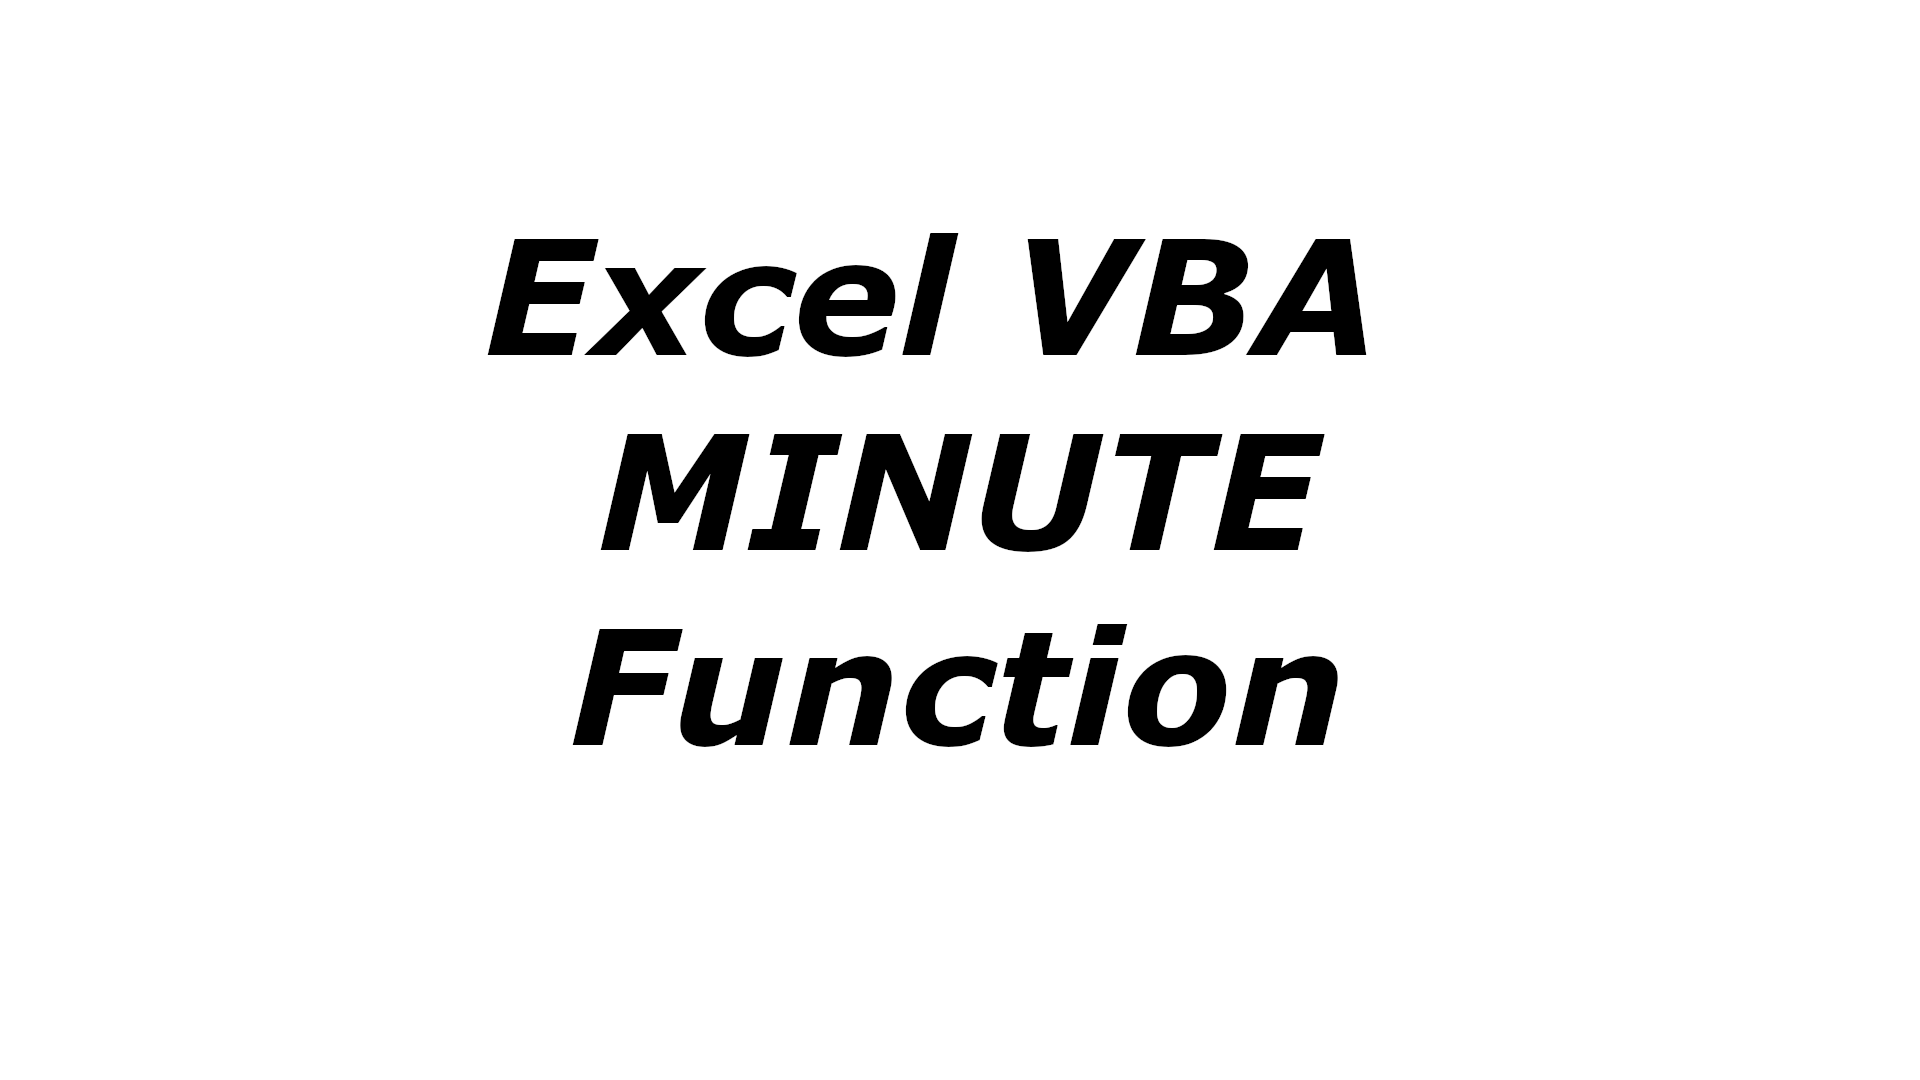 Excel VBA MINUTE function